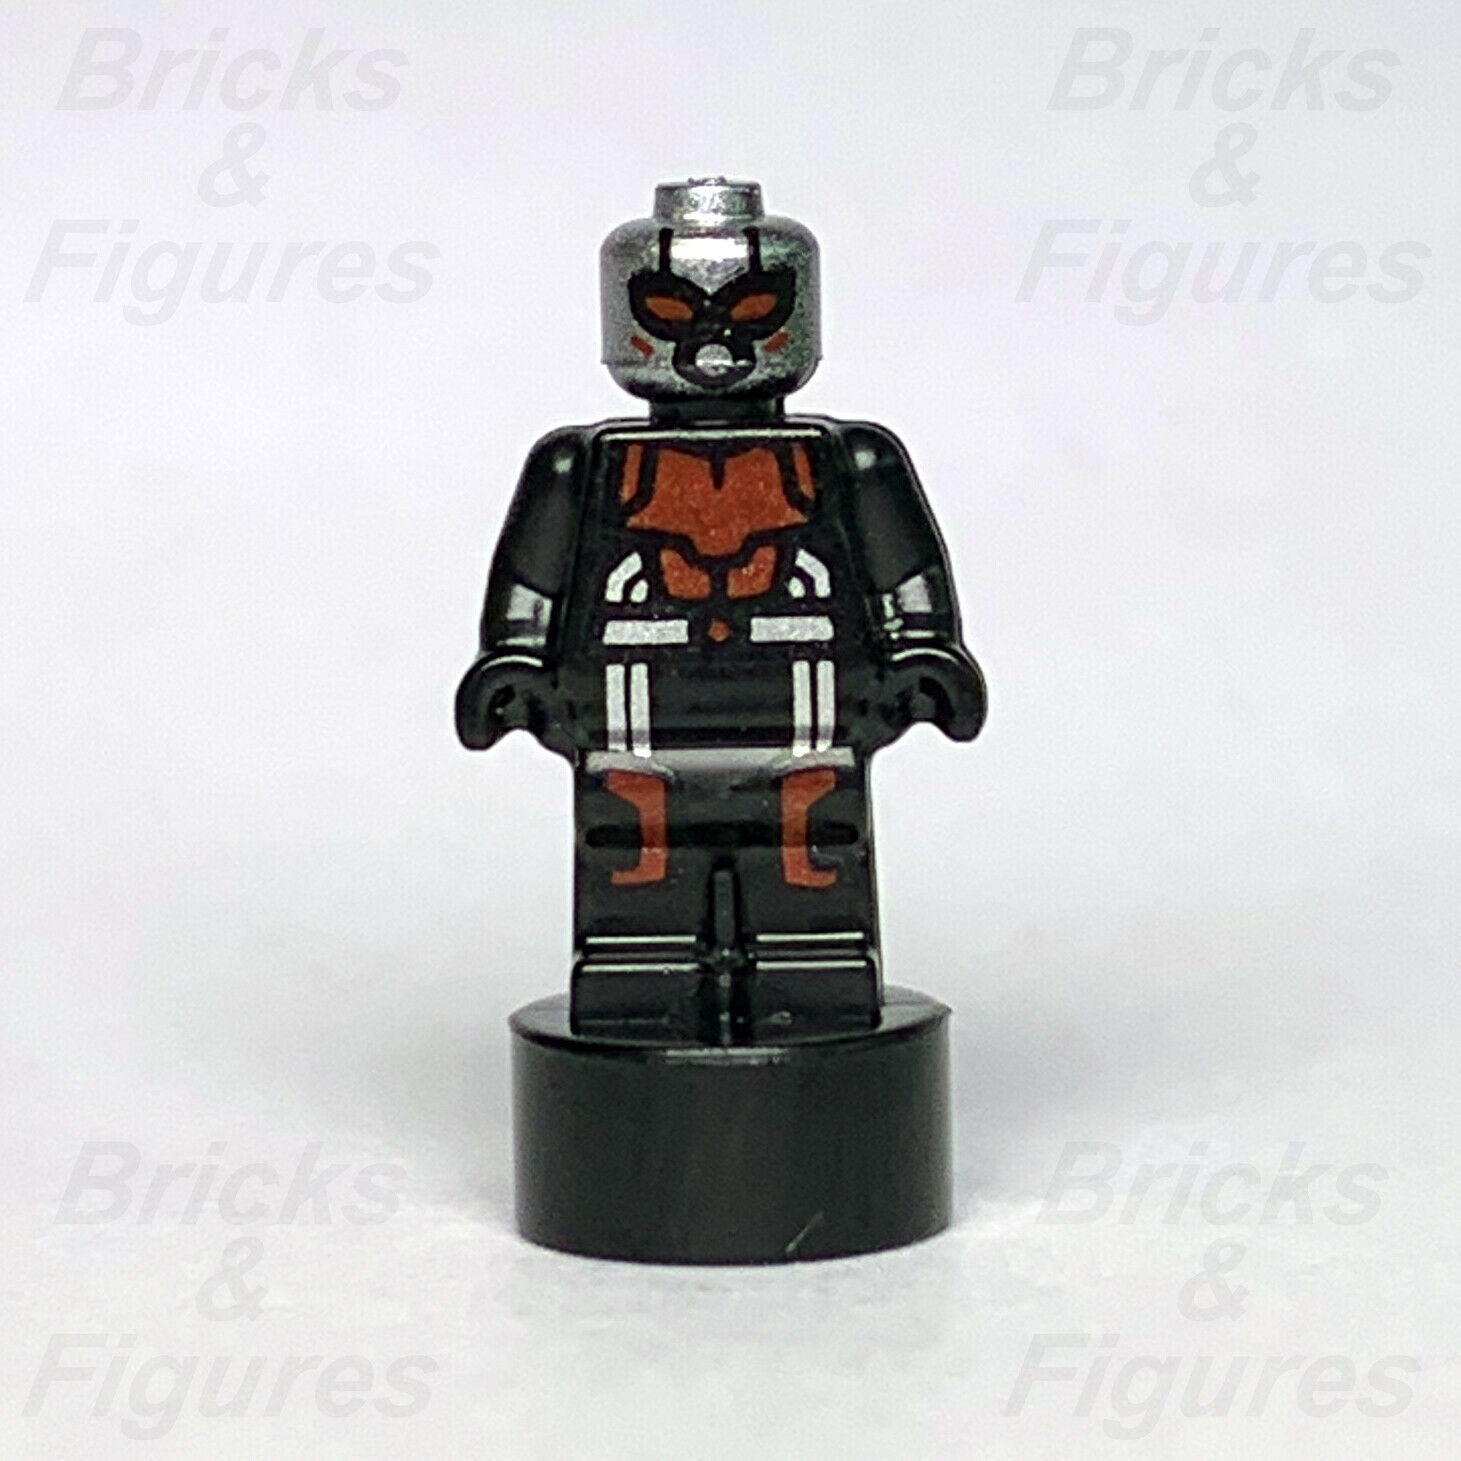 Marvel Super Heroes LEGO "Mini" Ant-Man Small 76051 Captain America Civil War - Bricks & Figures